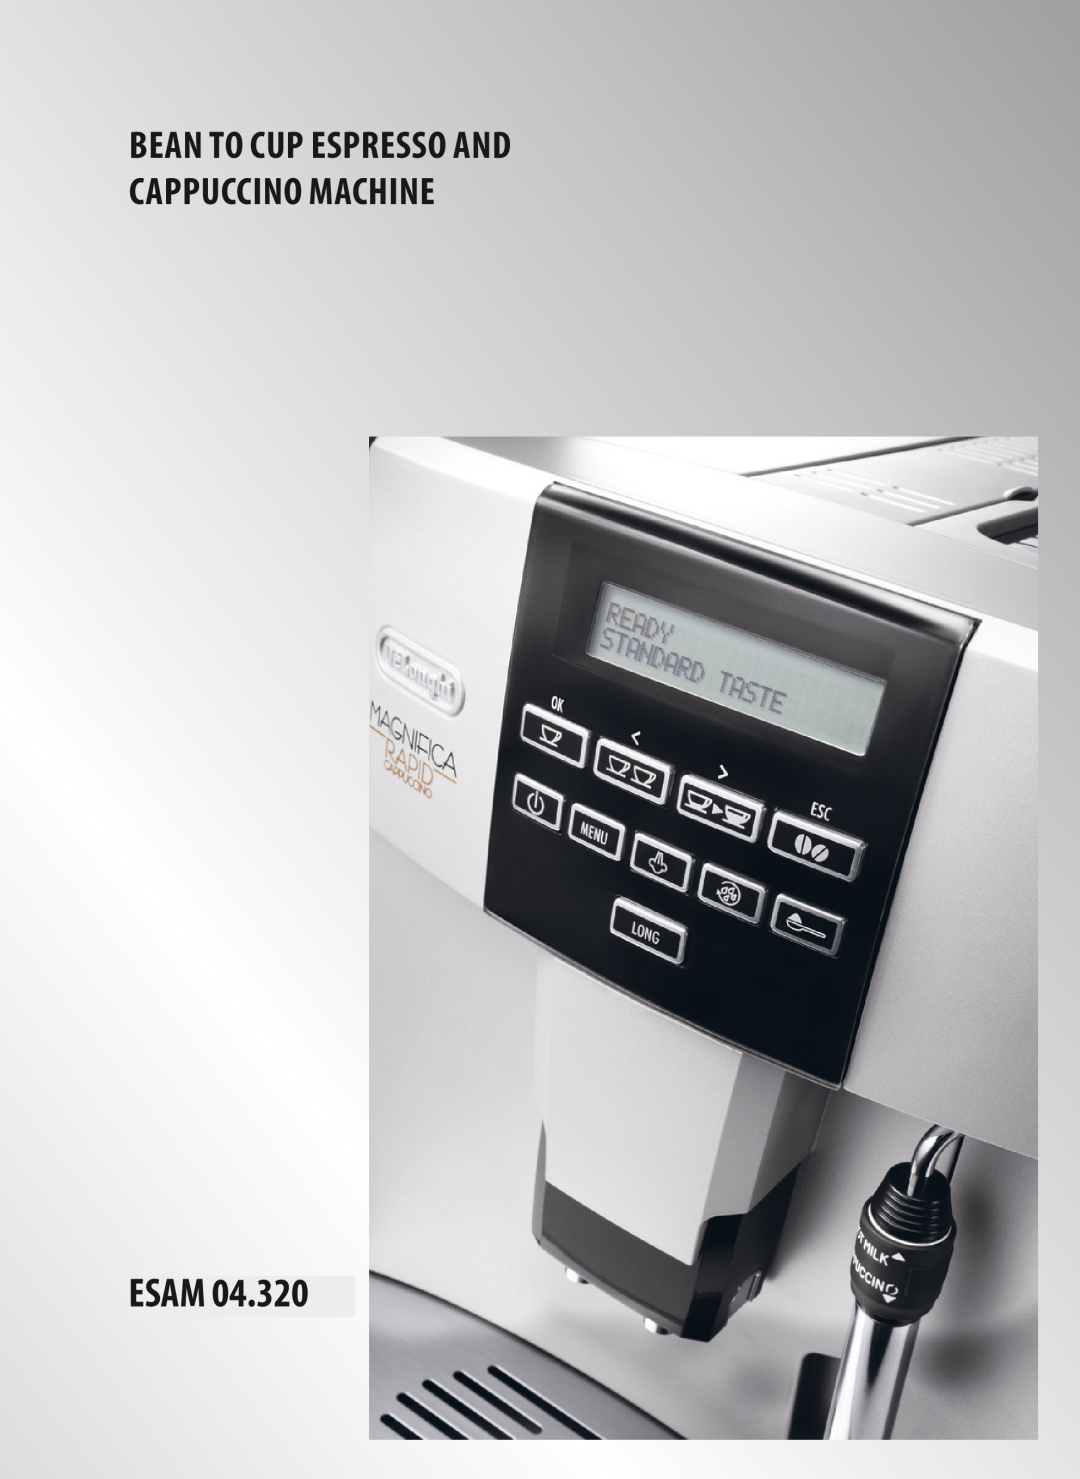 DeLonghi 5713214281 manual De Gb, Esam, Bean To Cup Espresso And Cappuccino Machine 